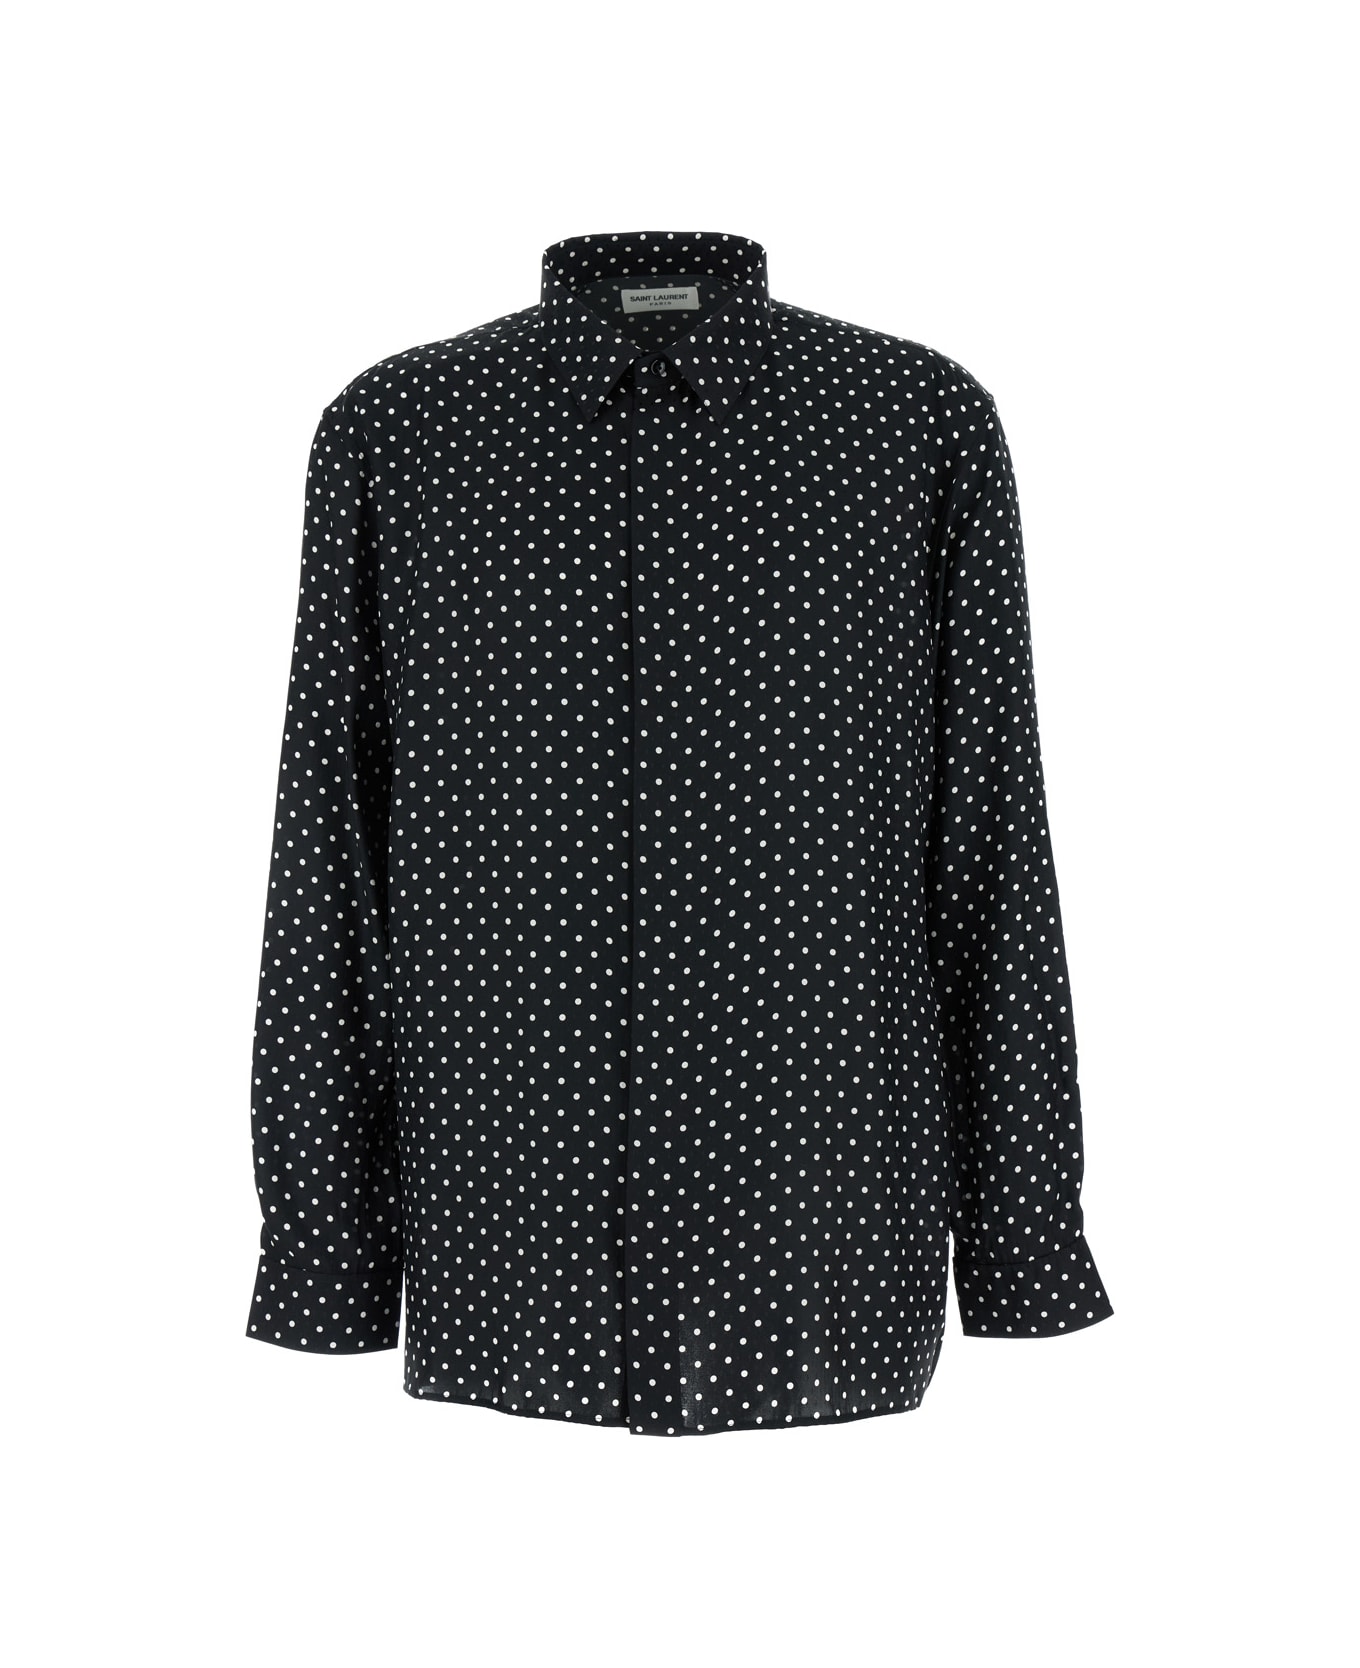 Saint Laurent Black All-over Polka Dot Pattern Shirt In Silk Man - Noir/craie